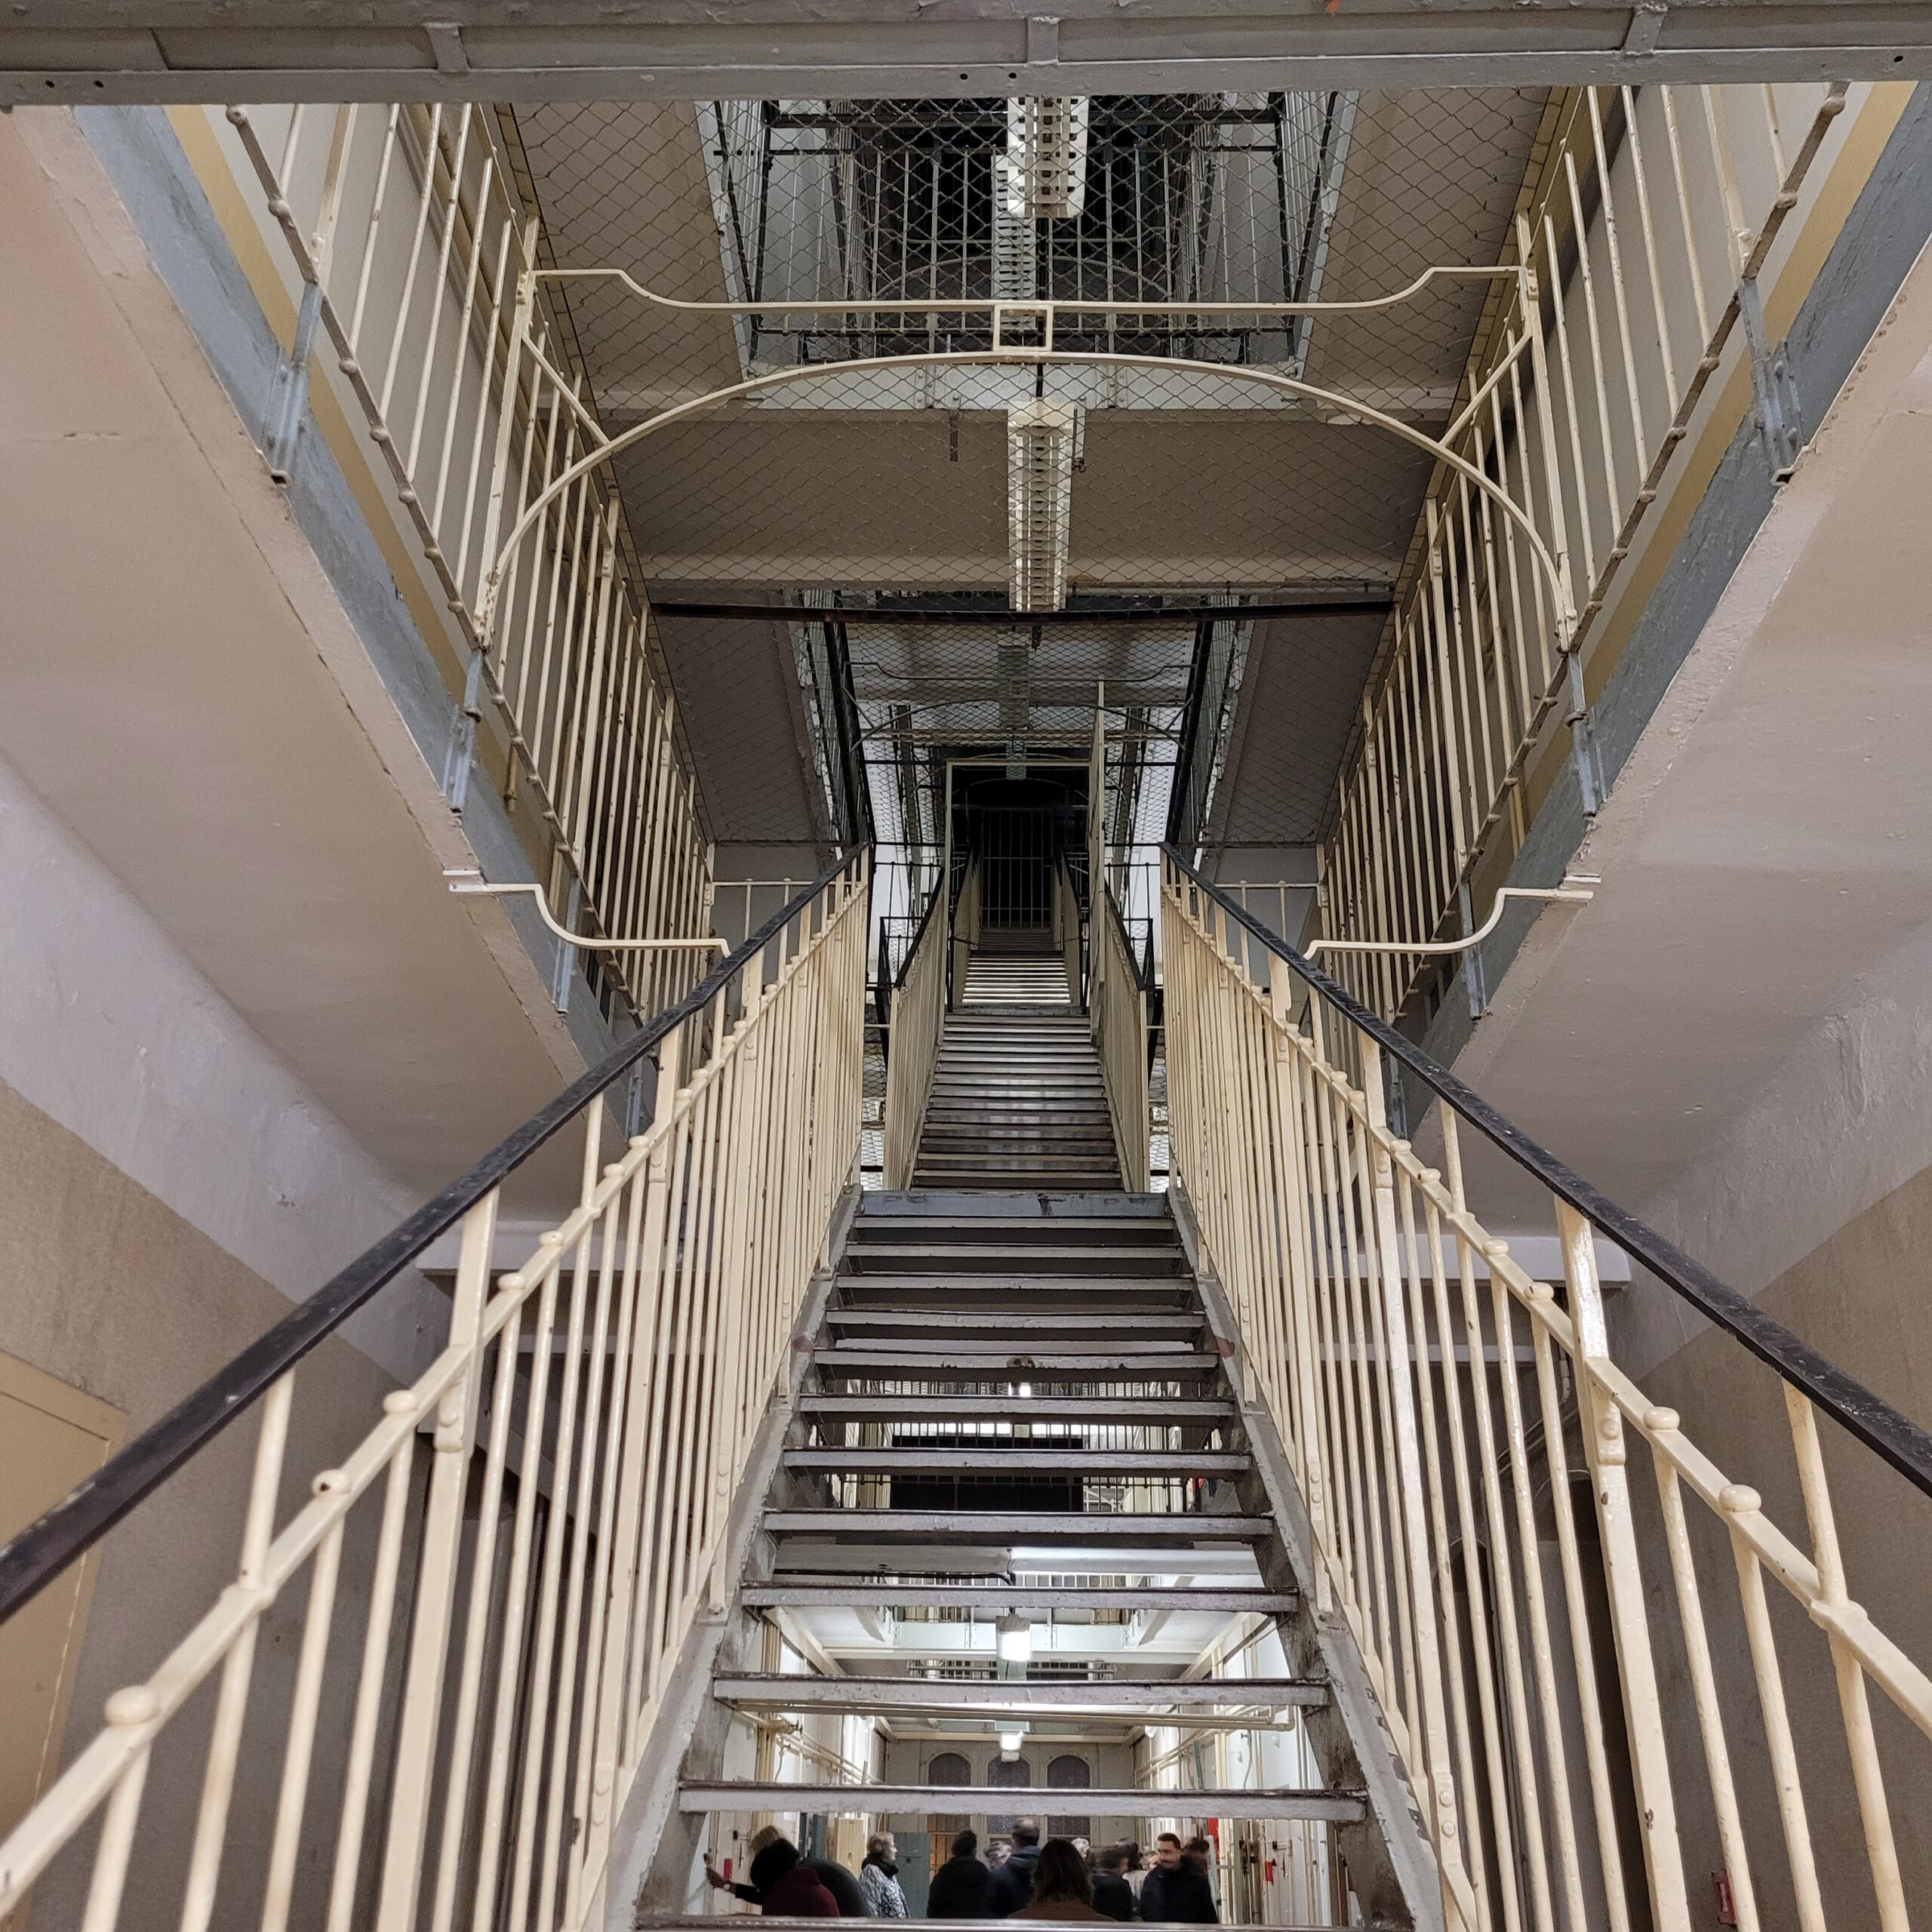 Treppenaufgang im Zellentrakt Bautzen II, ehemaliges Stasigefängnis, heute Gedenkstätte